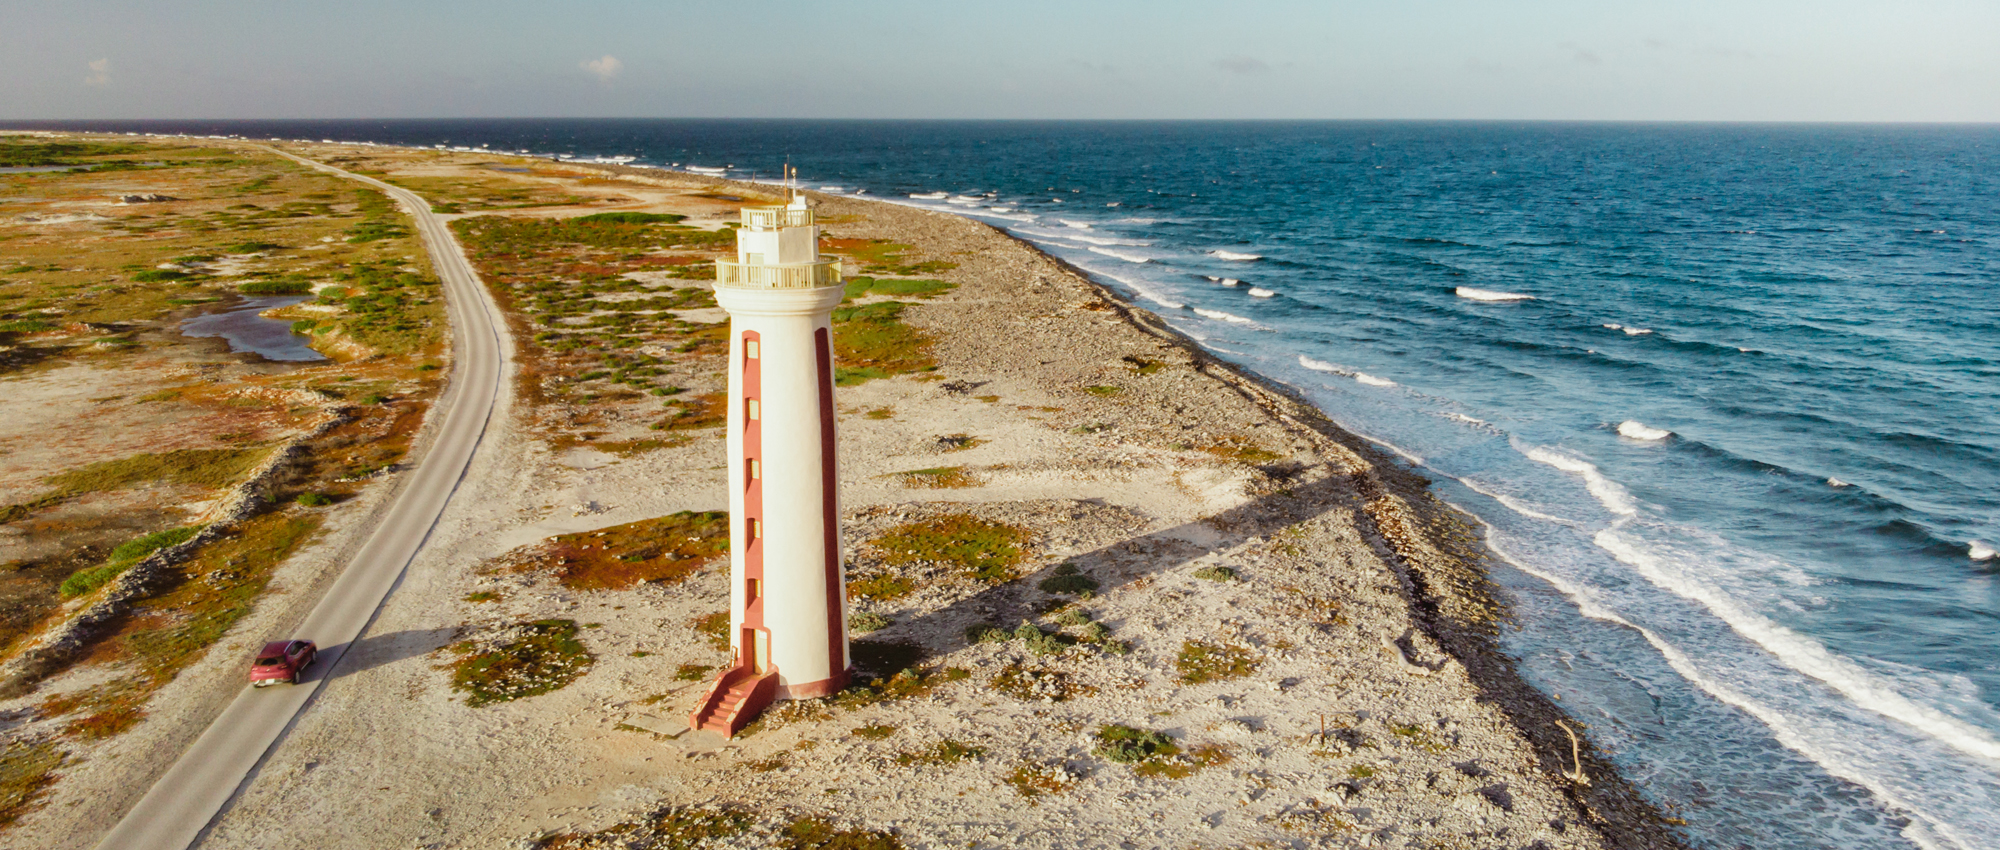 Aerial image of lighthouse on island coast